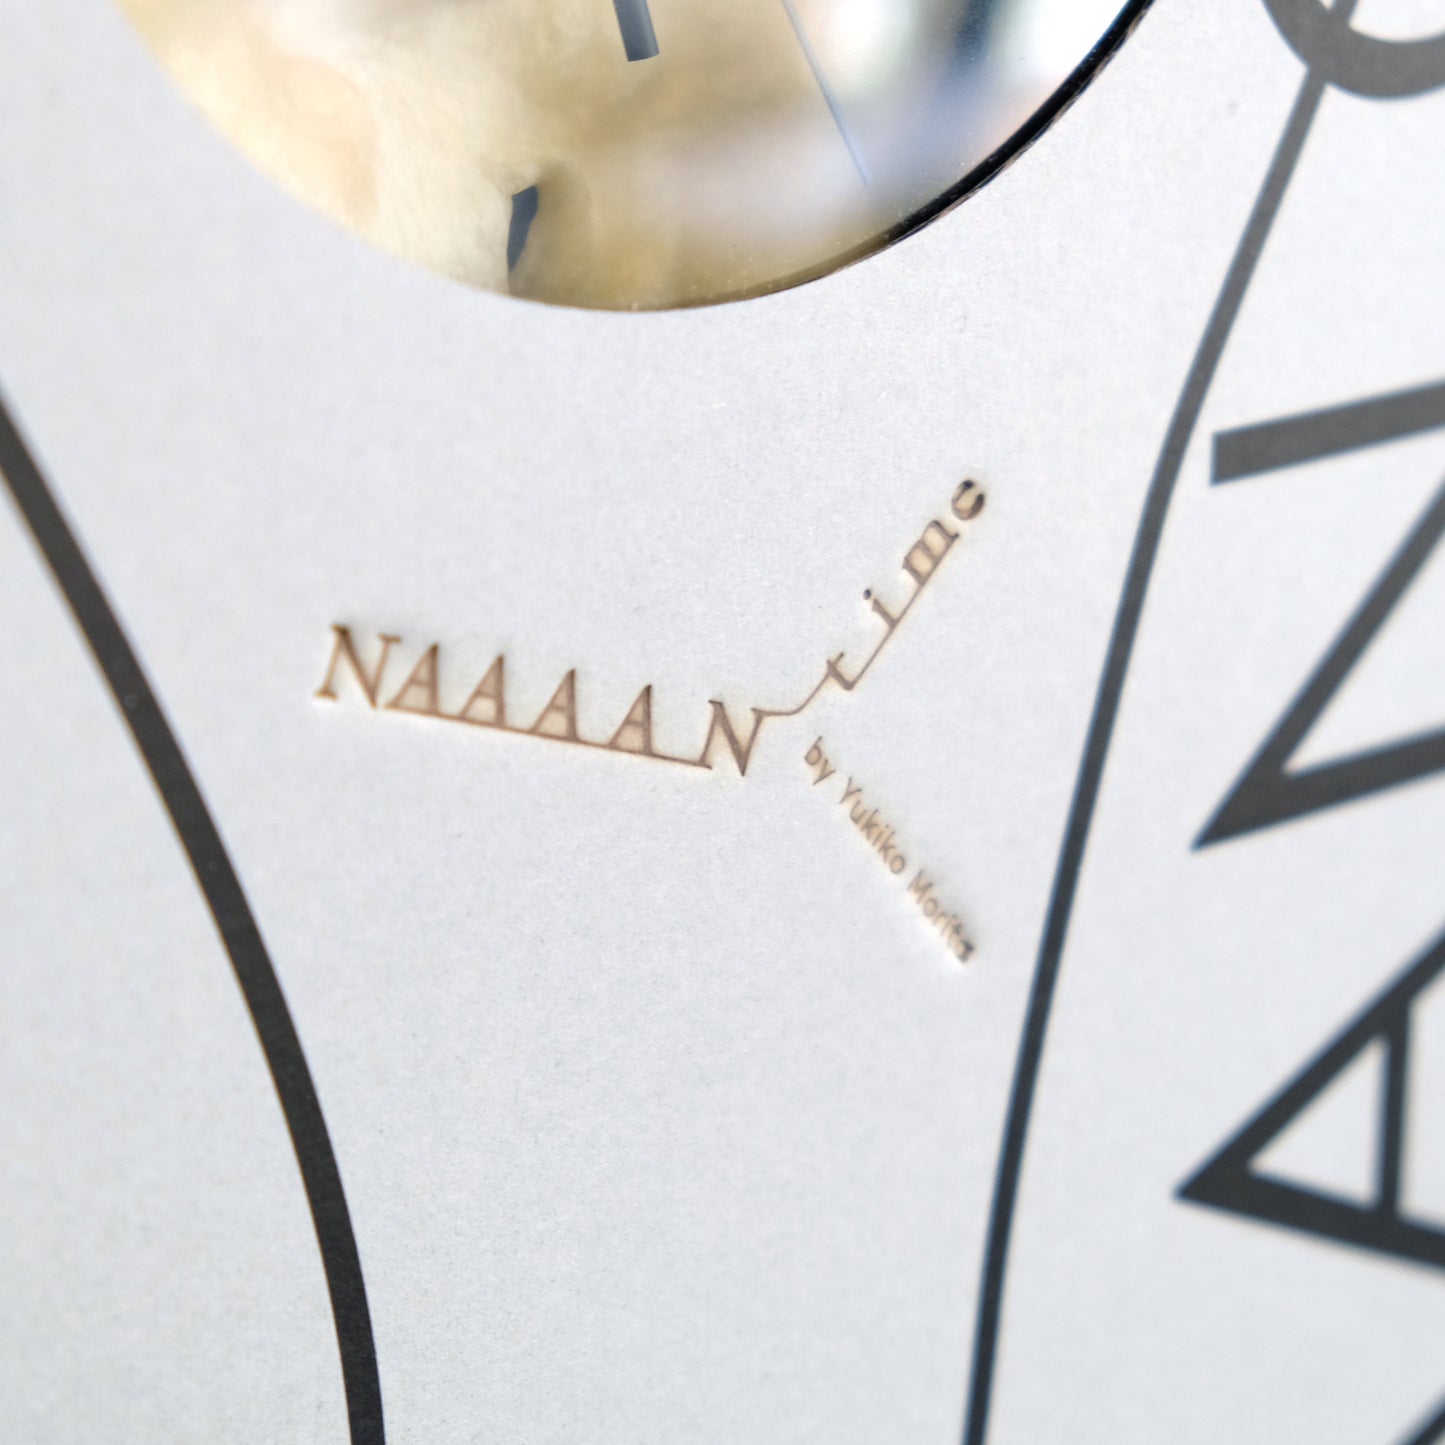 NAAAAN Time Melting naan: A Clock Made of Real Naan Bread!